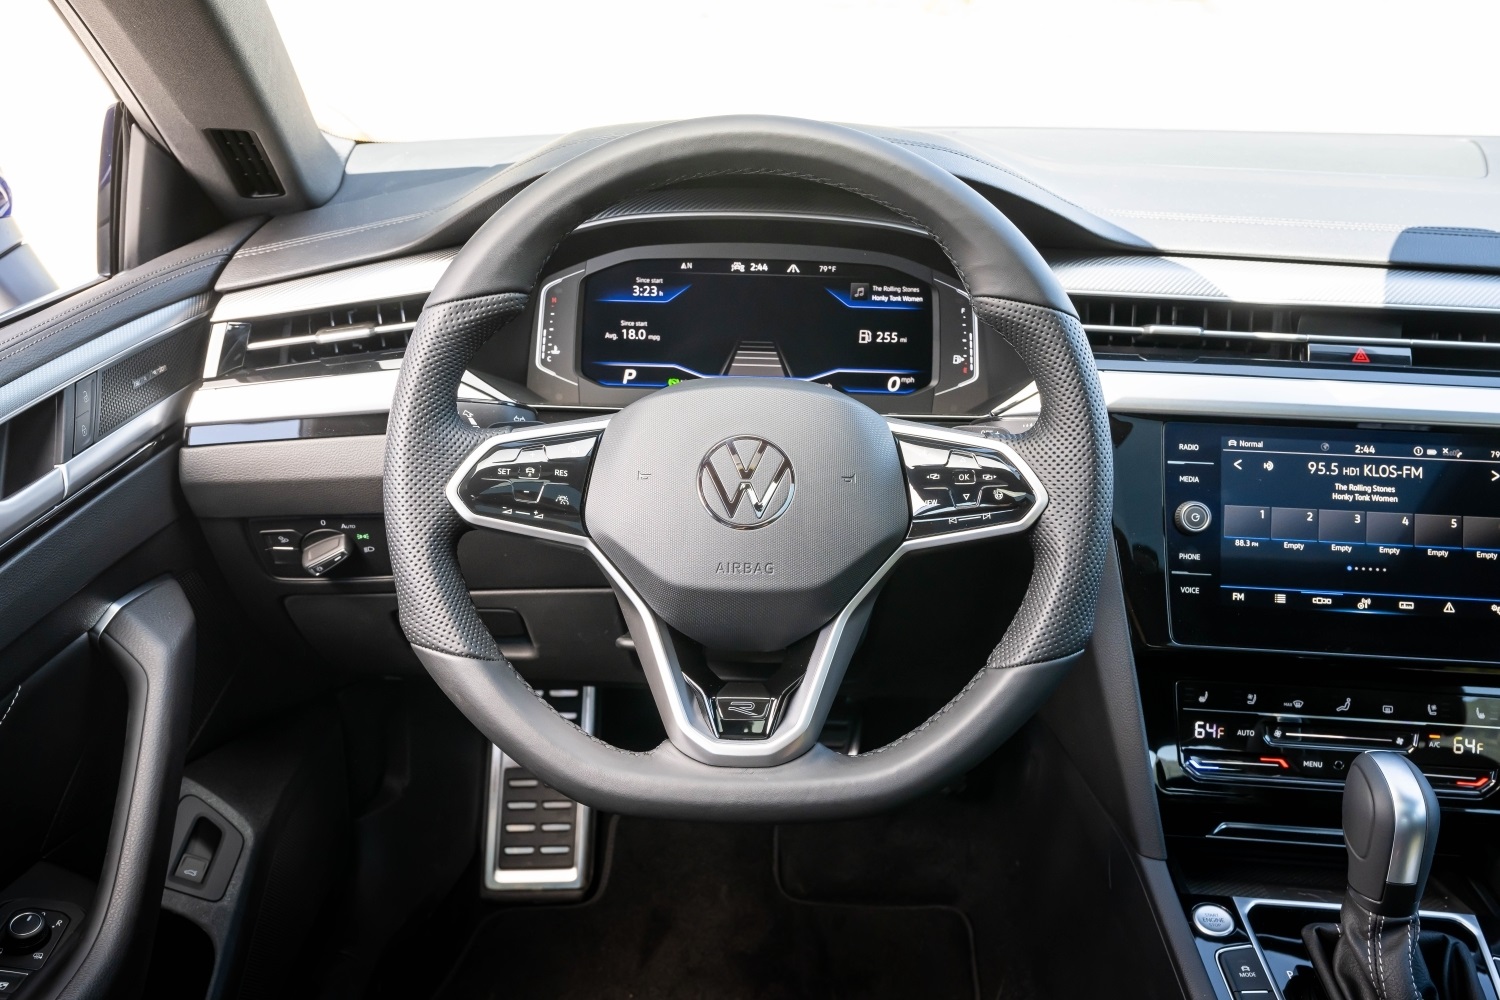 The 3-spoke steering wheel